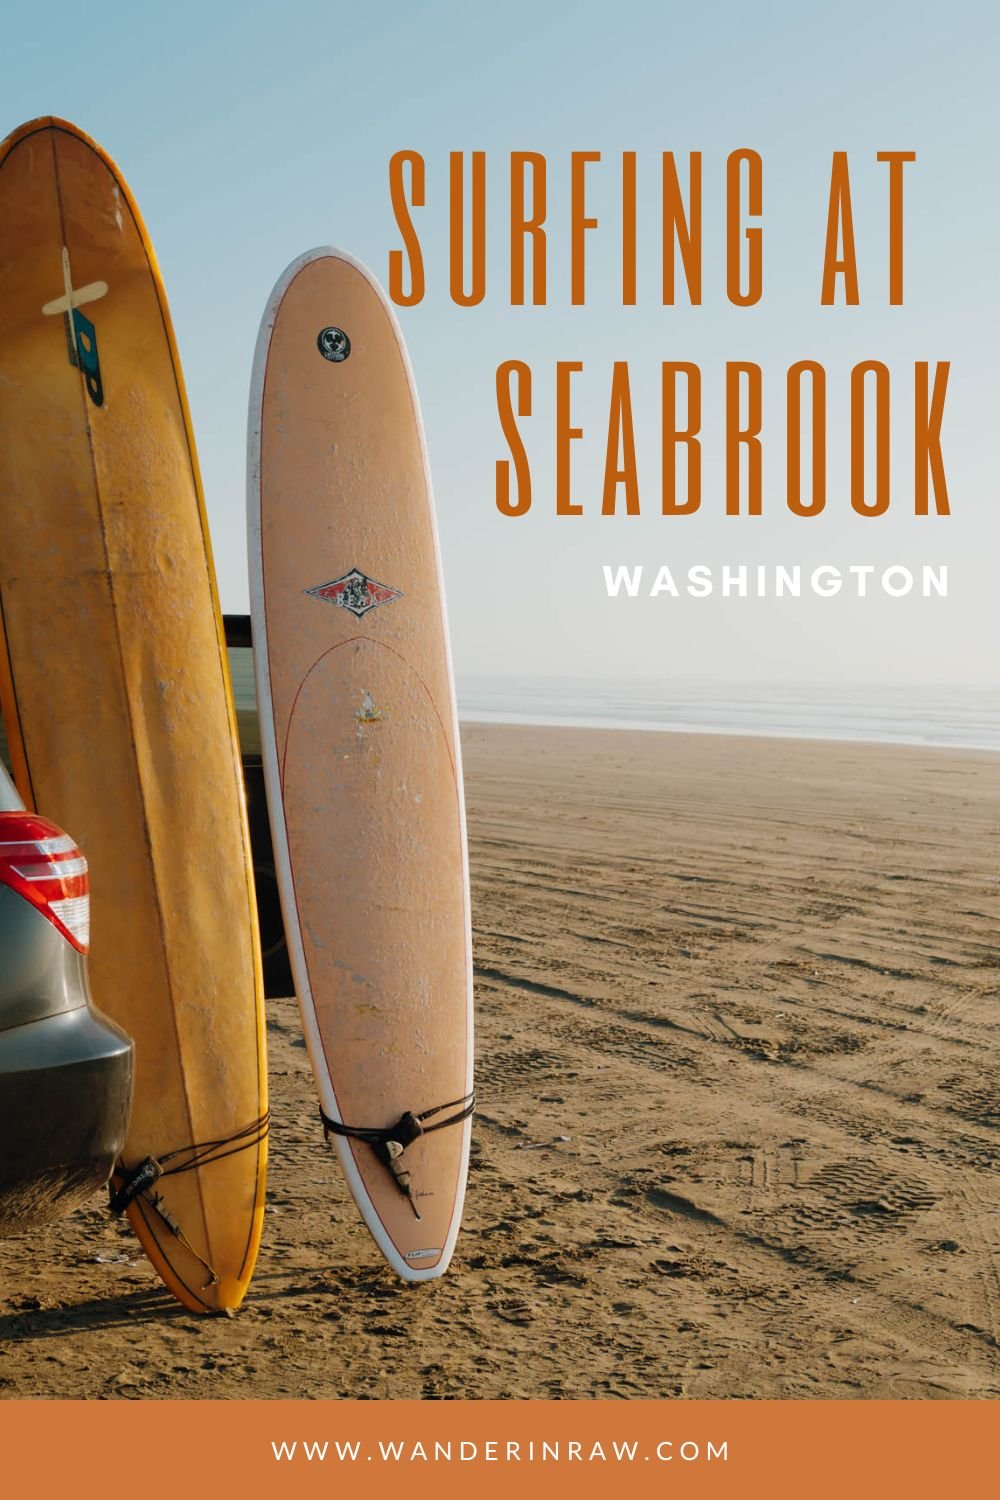 Surfing in Washington: Seabrook